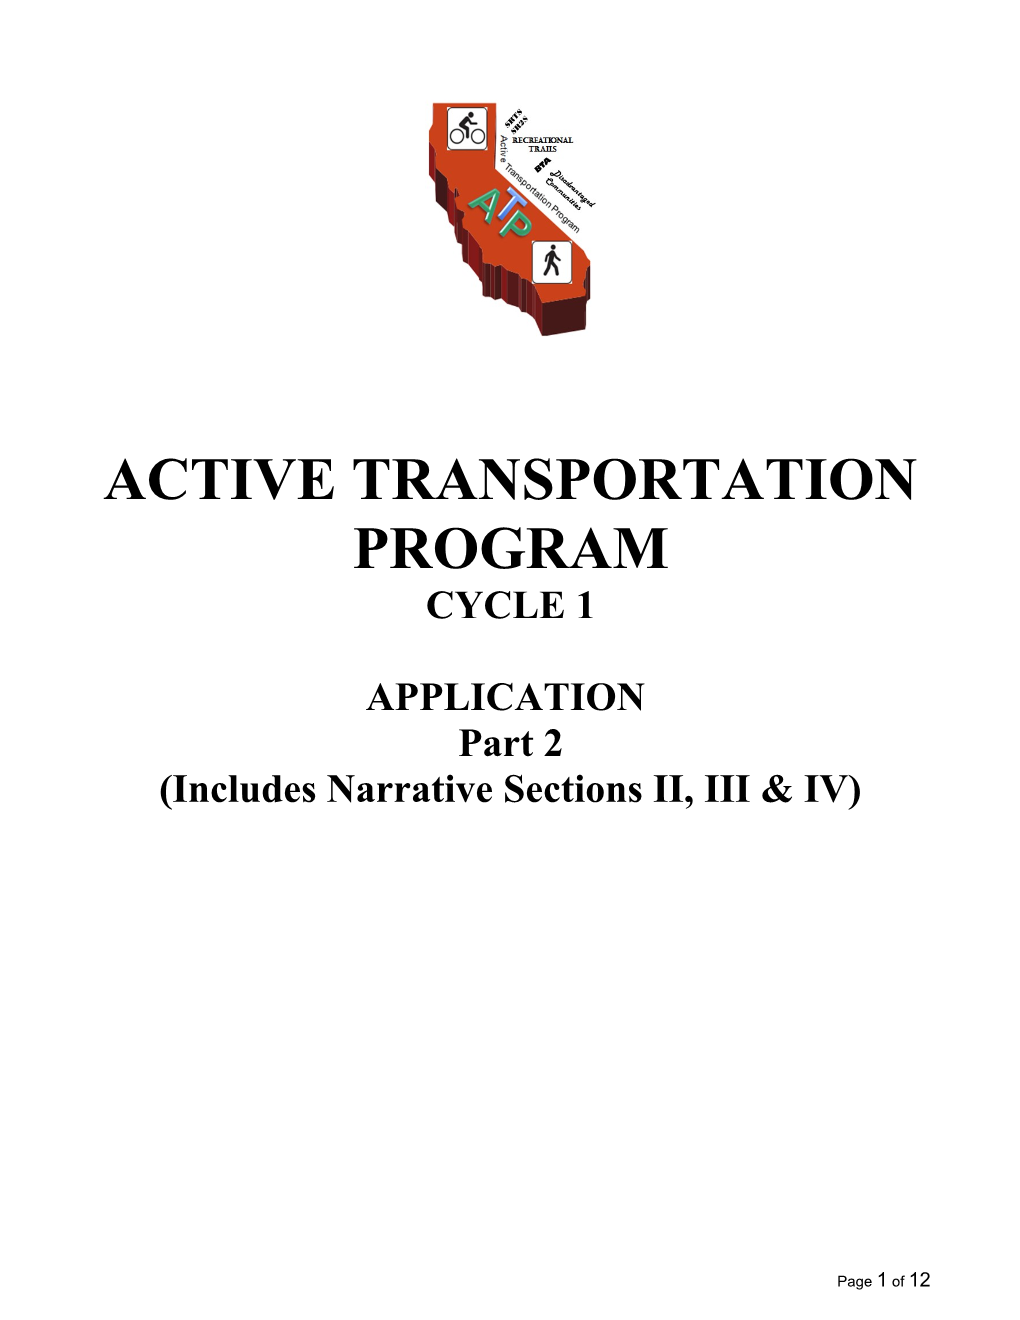 Includes Narrative Sections II, III & IV